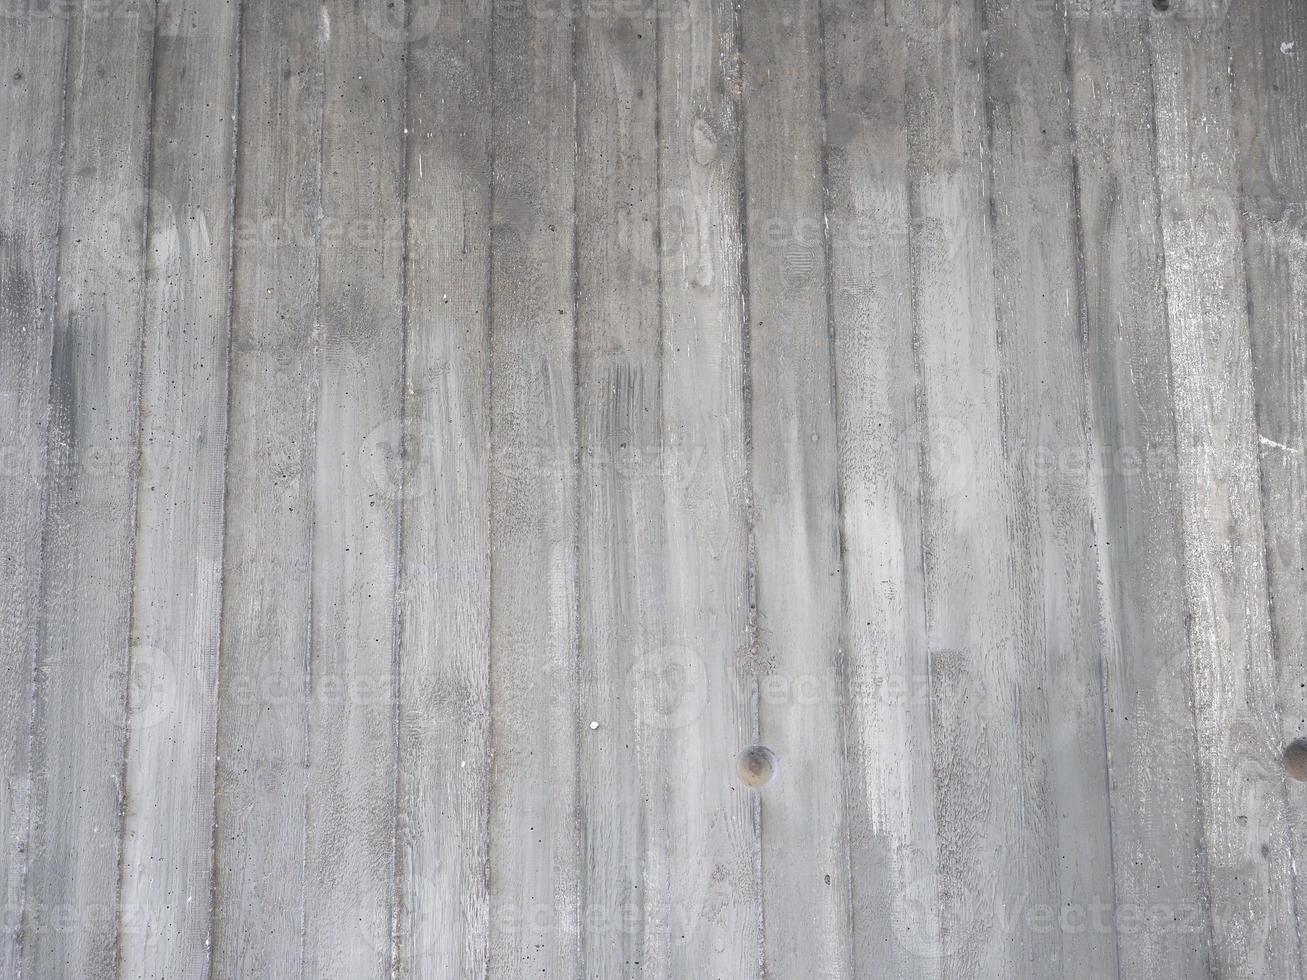 sfondo grigio cemento texture foto